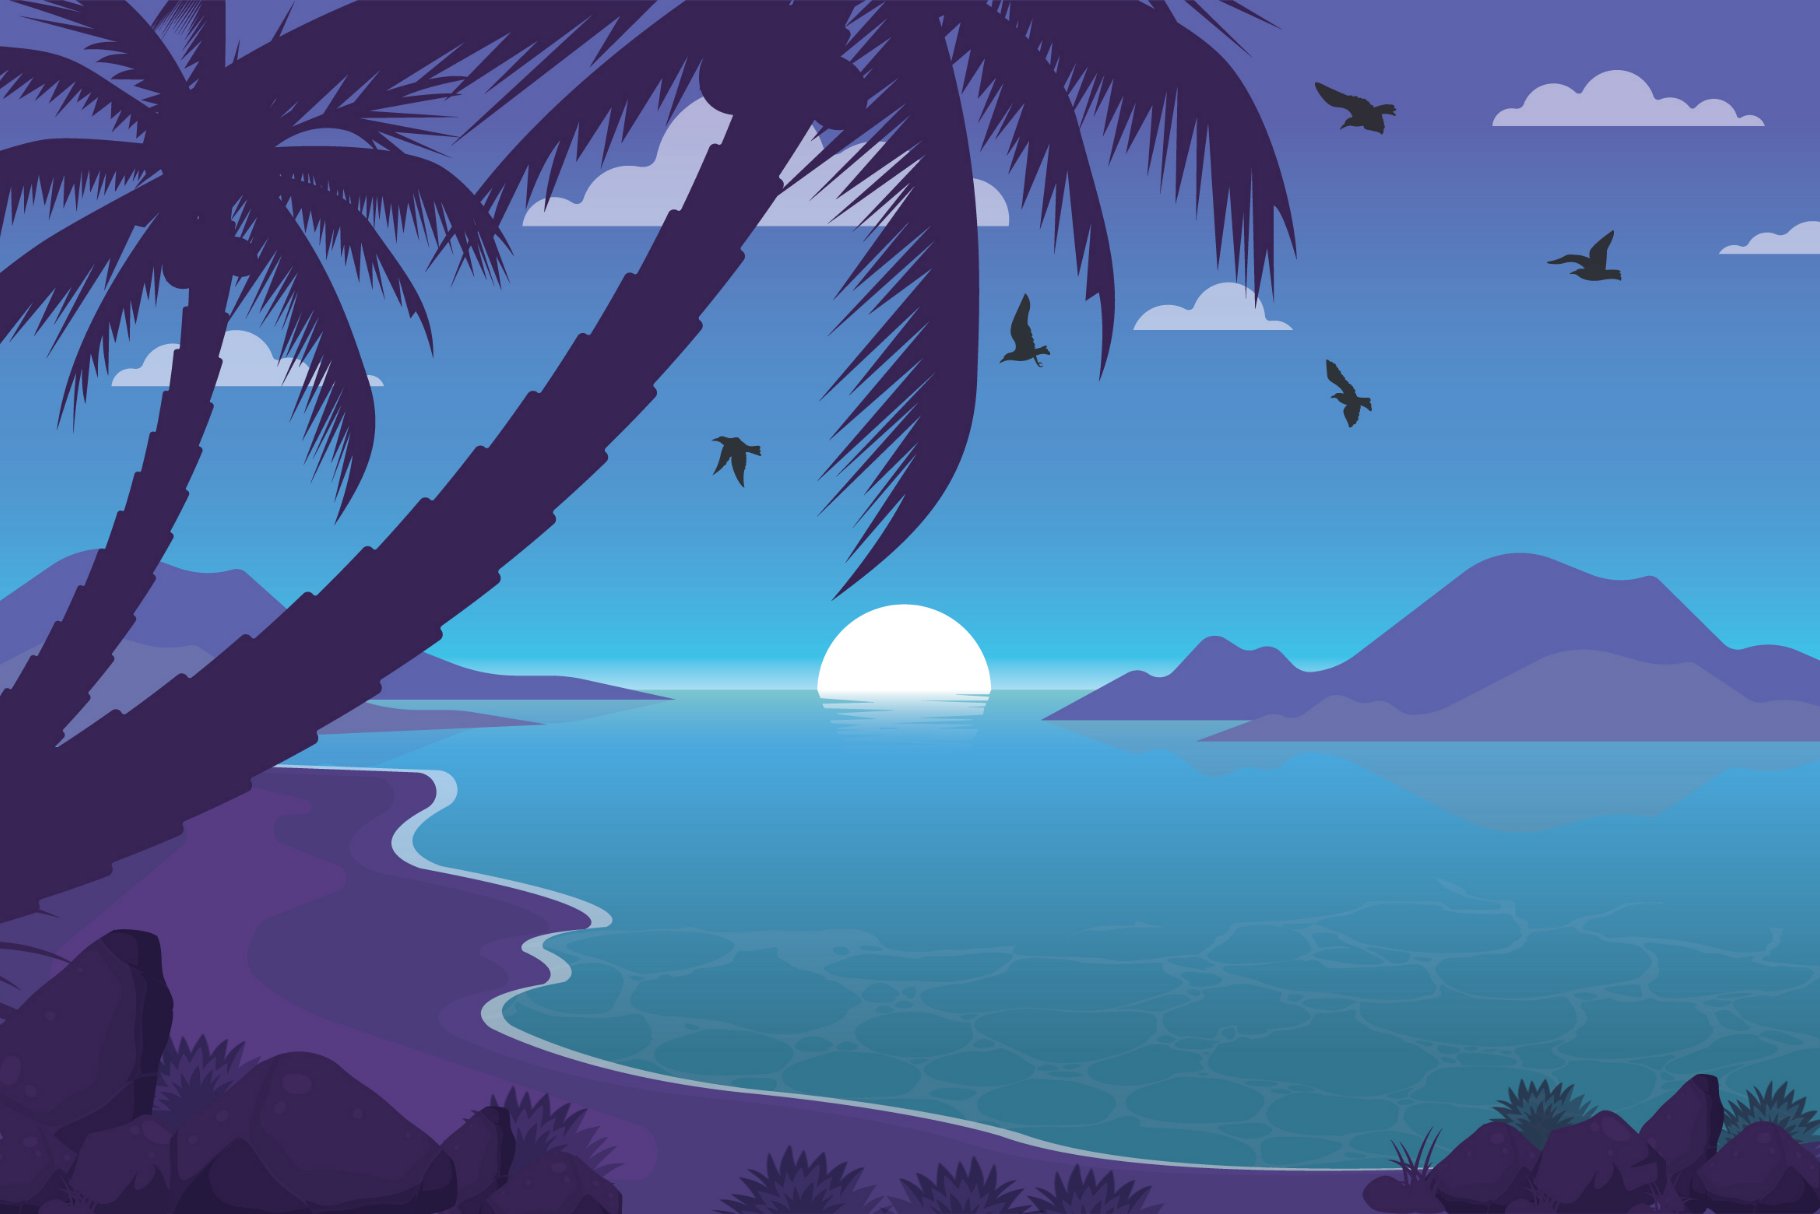 Evening Sunset - Illustration cover image.